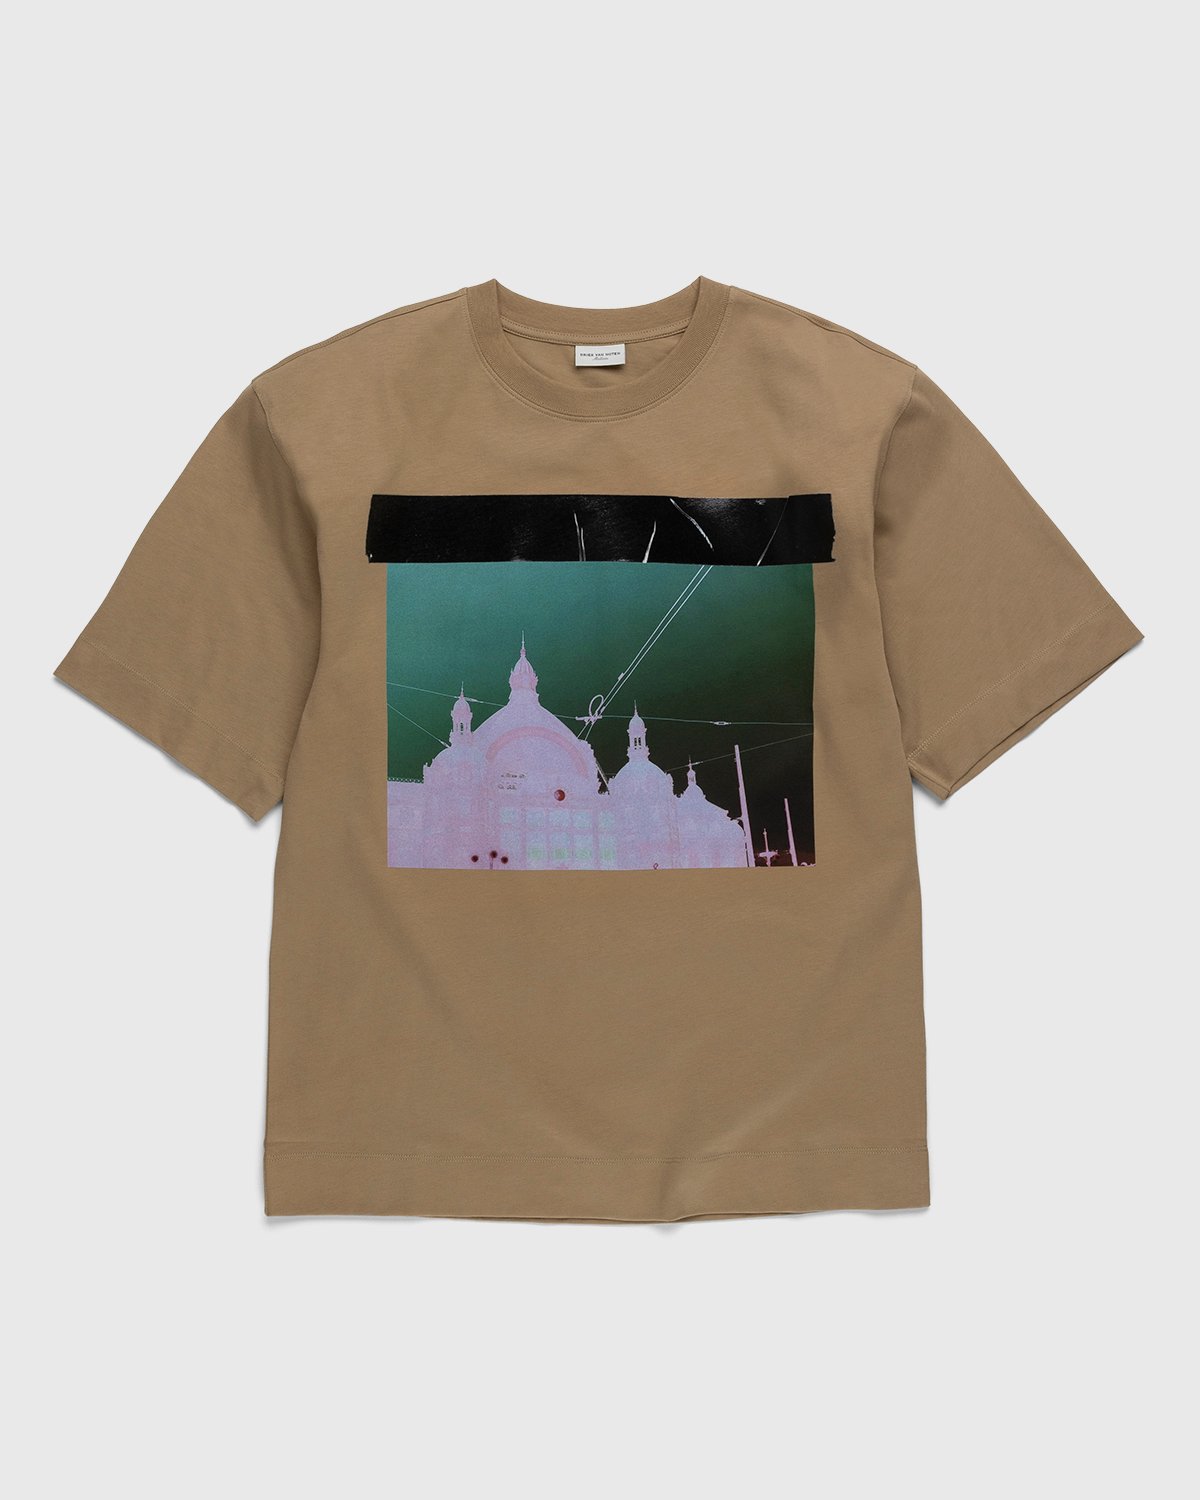 Dries van Noten - Heli Graphic T-Shirt Sand - Clothing - Beige - Image 1